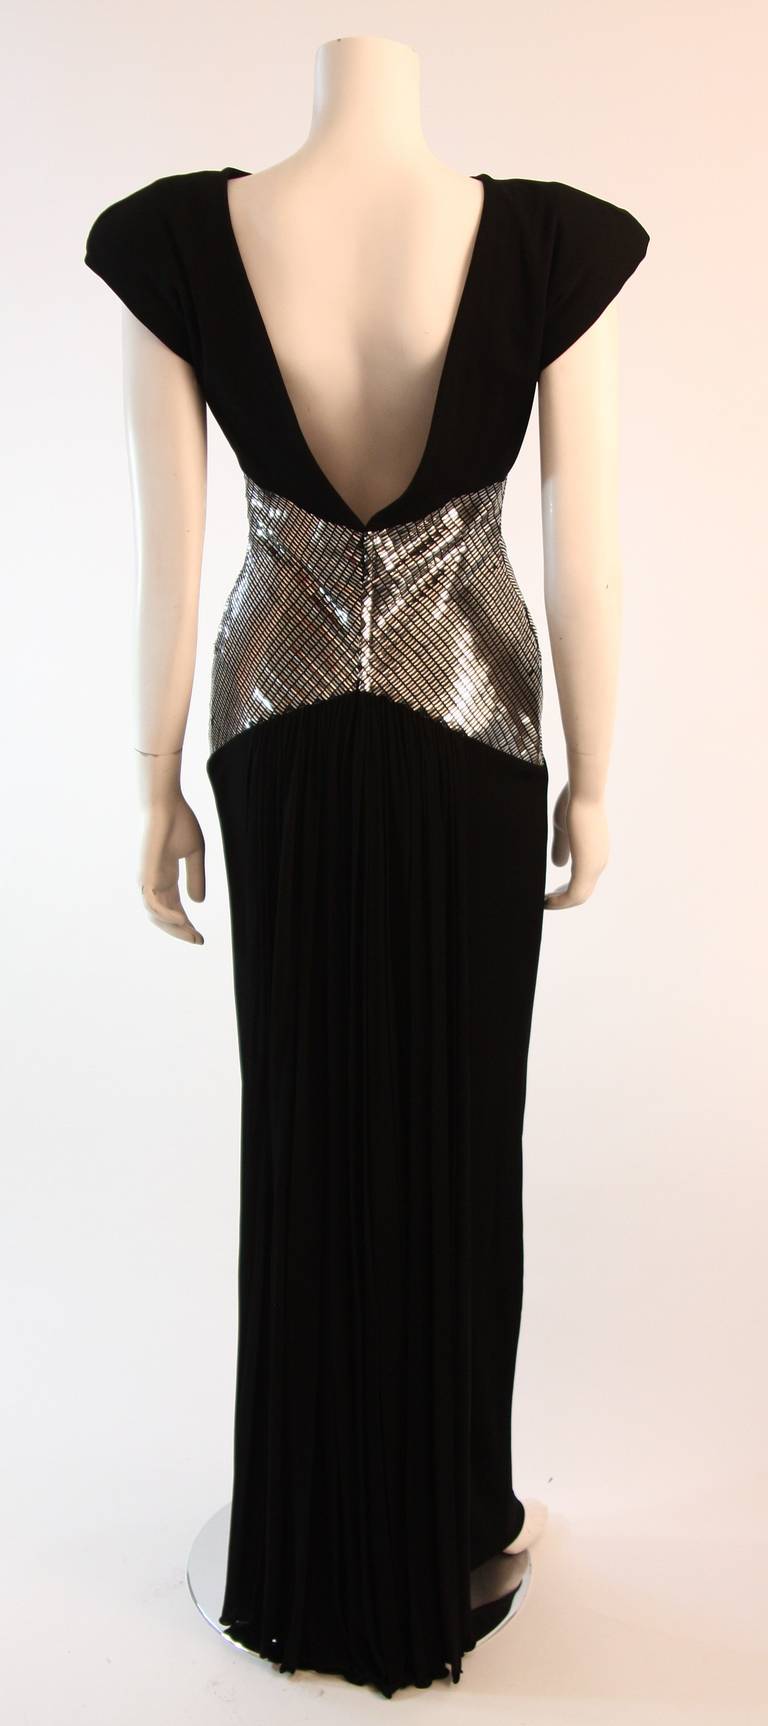 Ravishing Vicky Tiel Black Futurism Gown with Metallic Detail 3